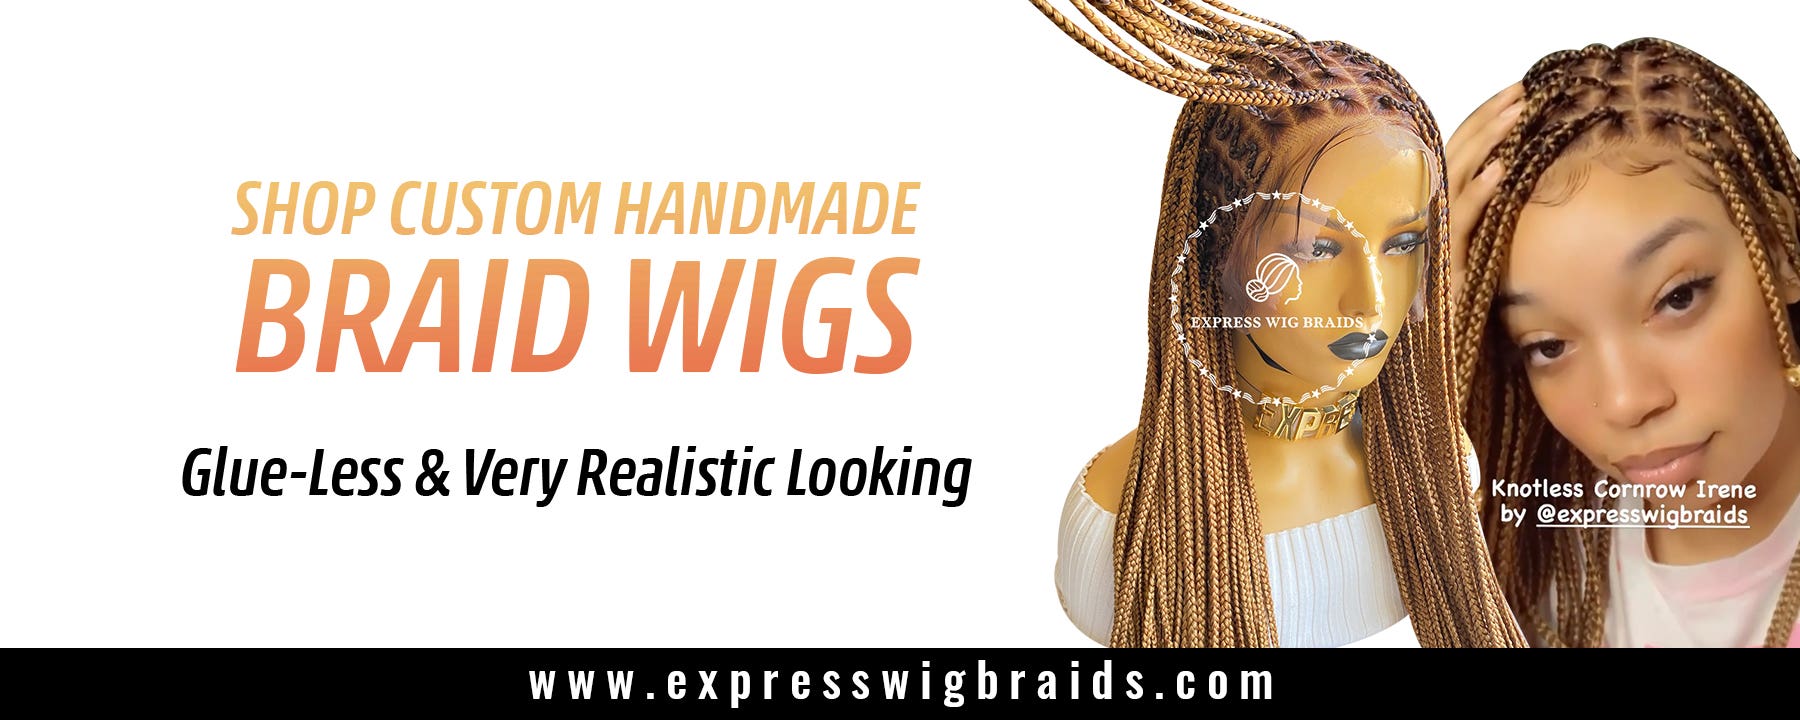 Express Wig Braids